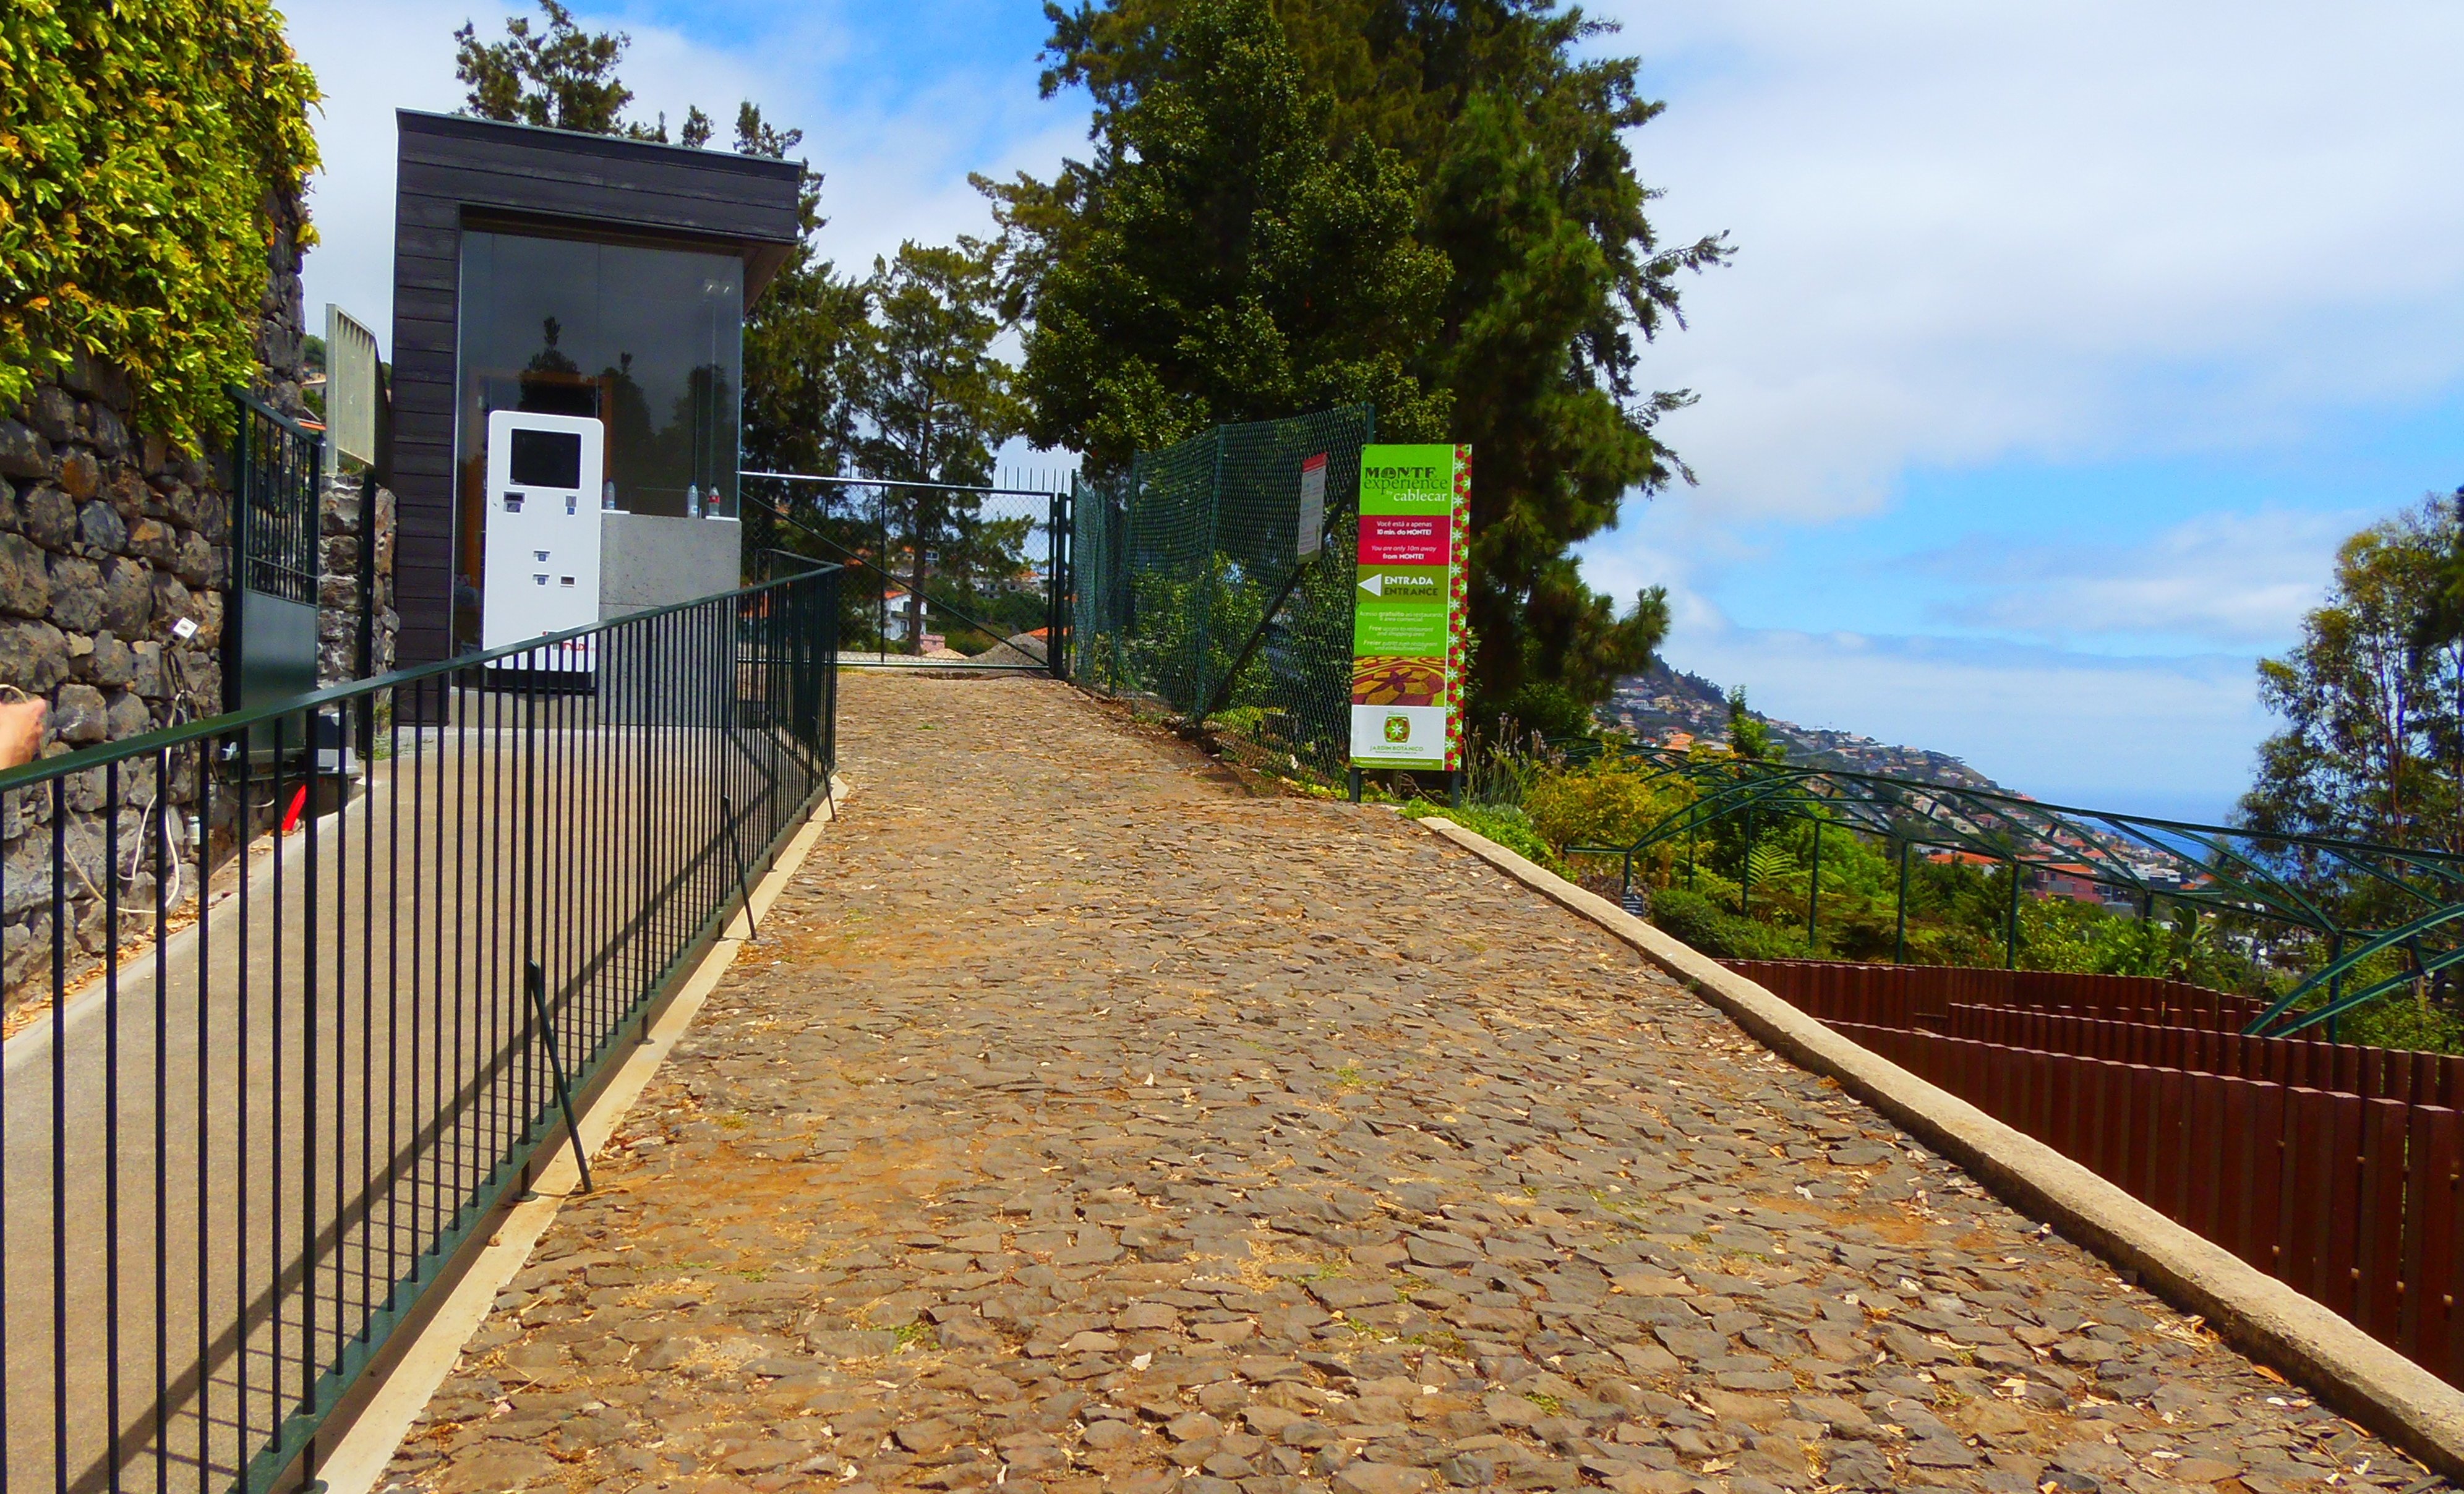 Portugália Madeira arborétum botanikus kert Funchal